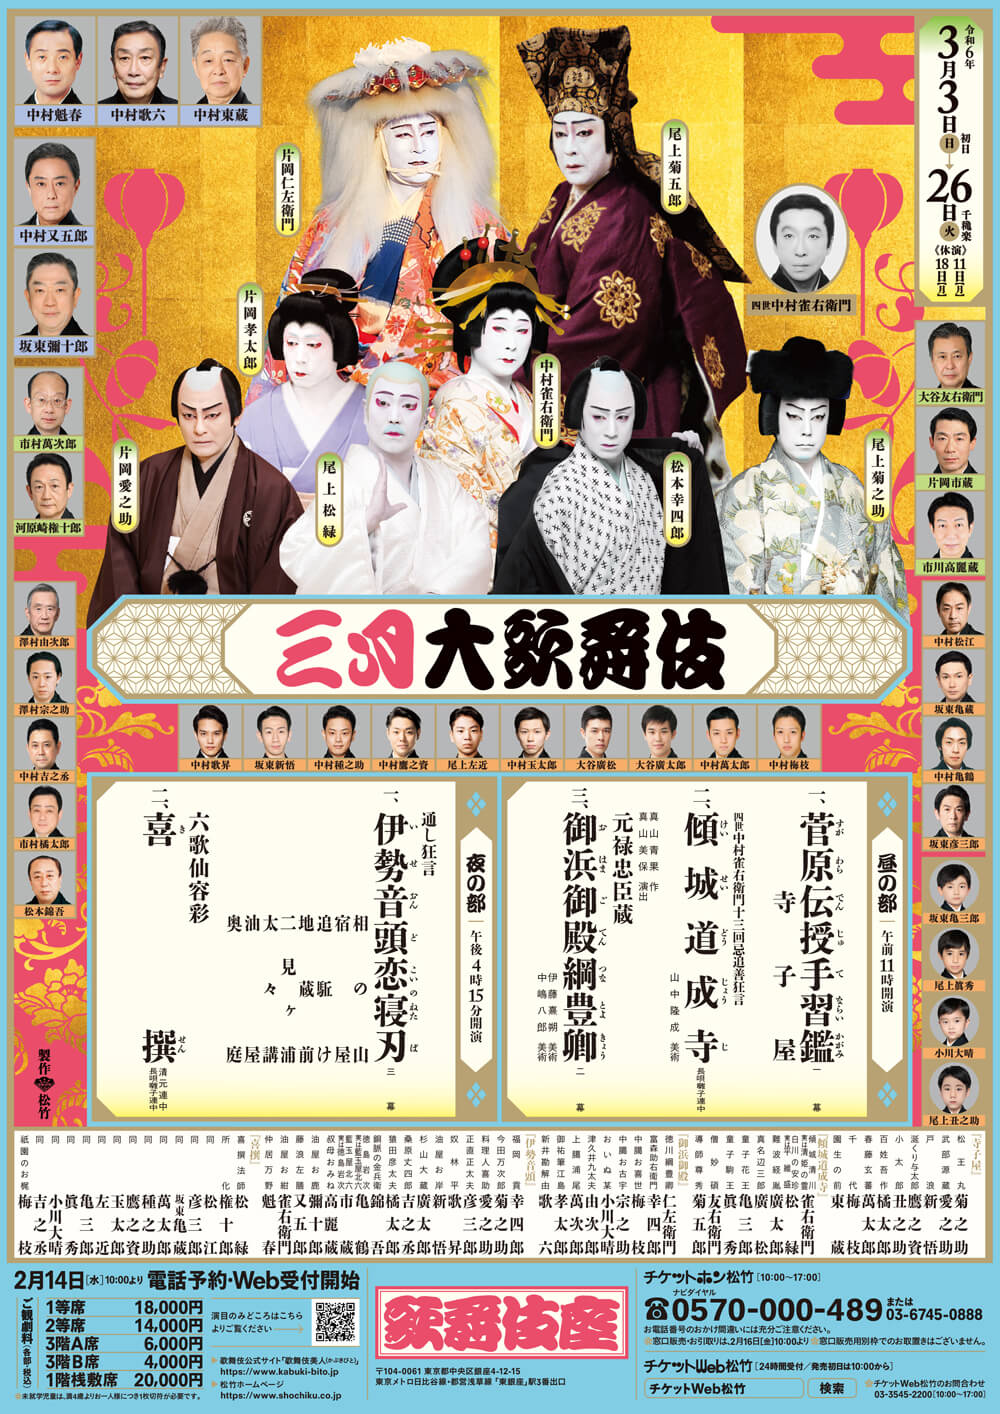 March Program at the Kabukiza Theatre